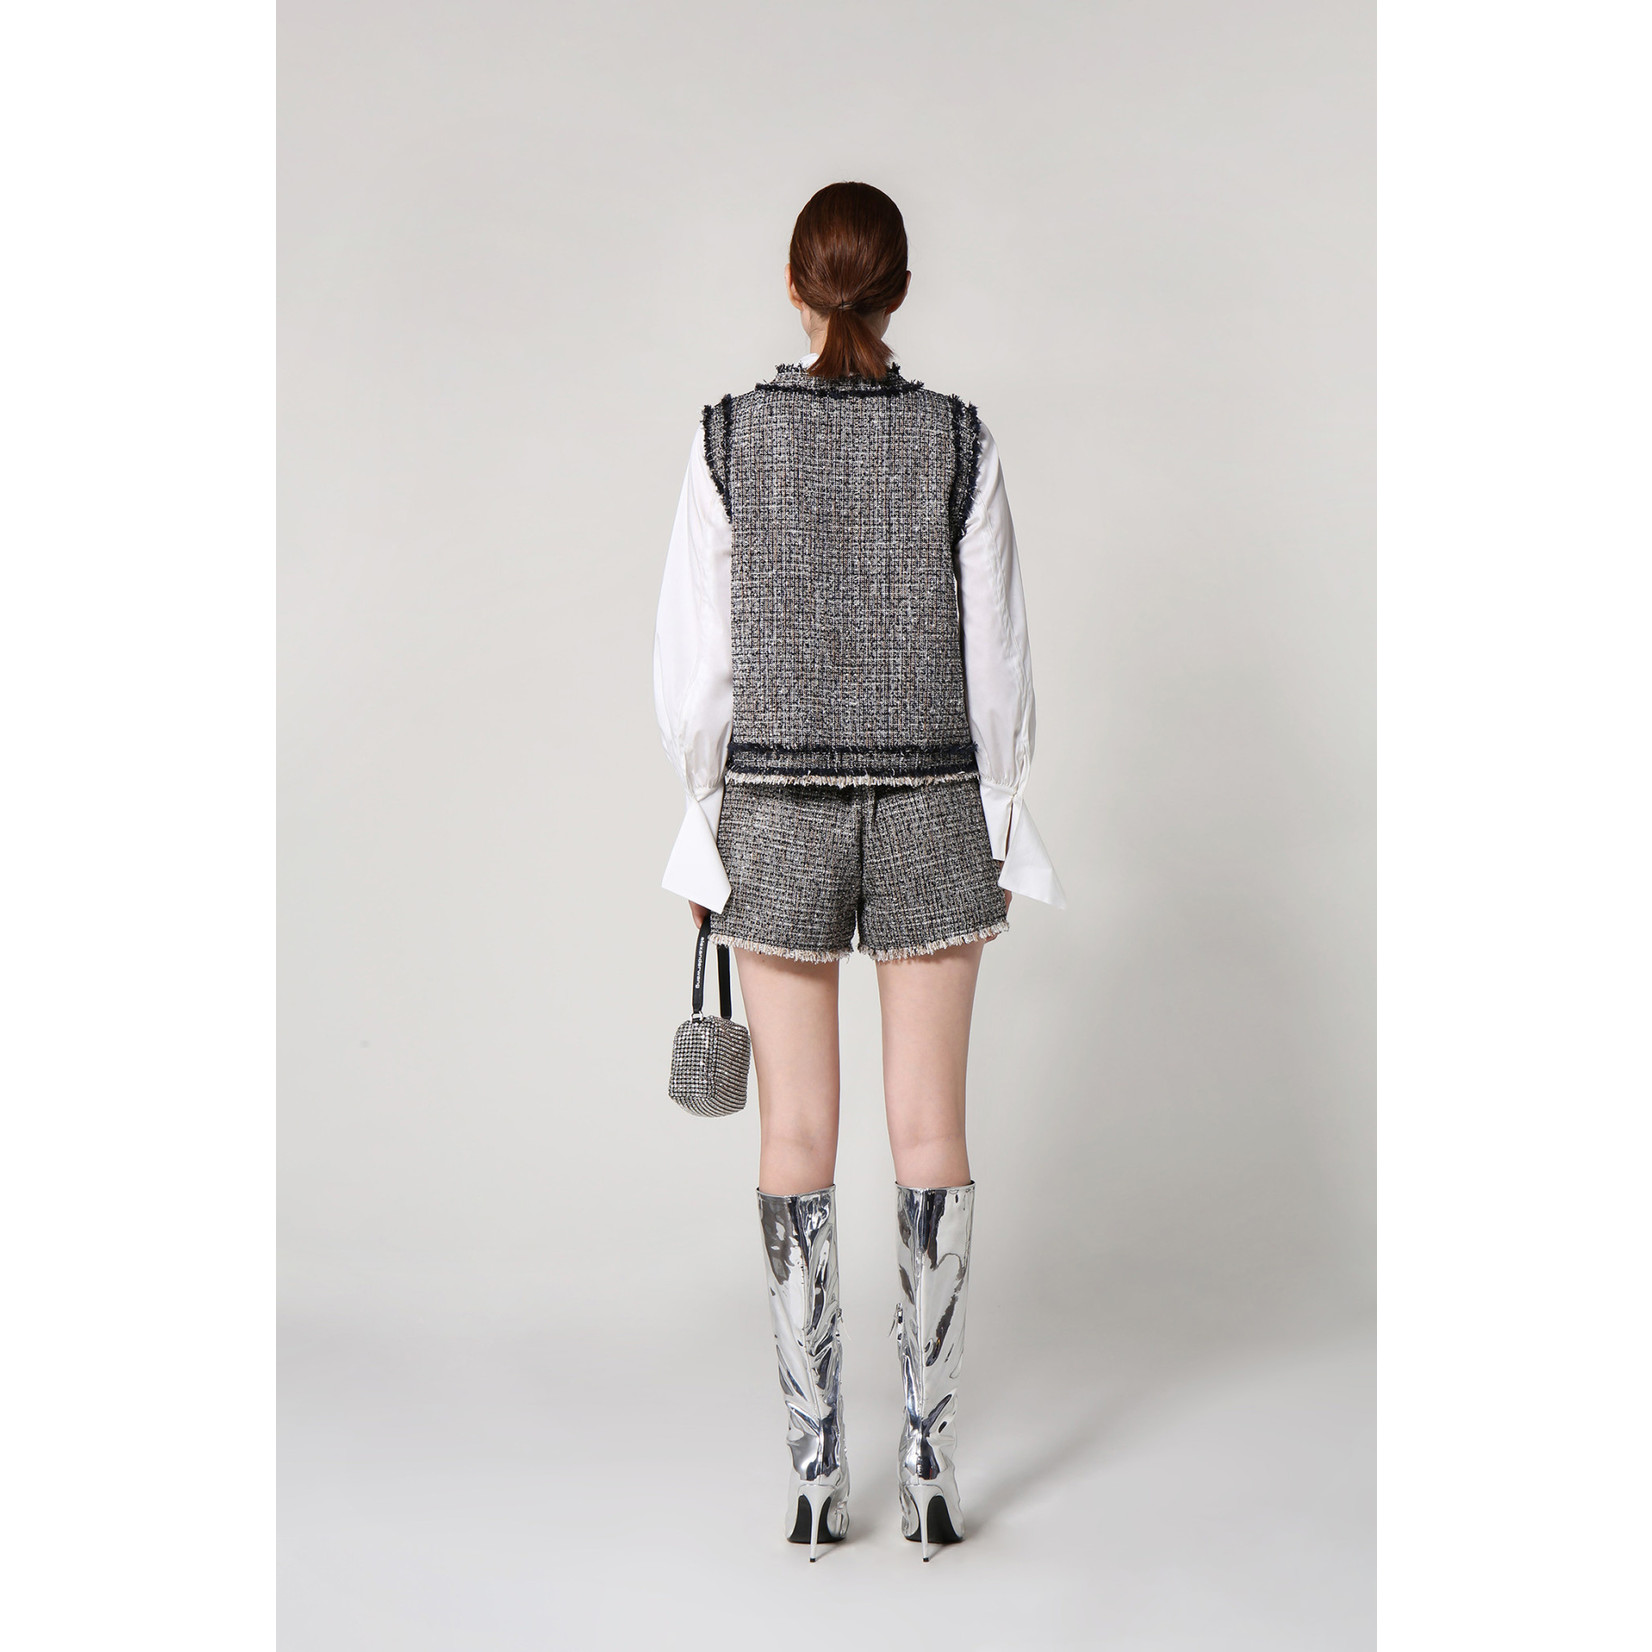 Mirra Masa AiTU TZ002S Shorts with Fray Detail